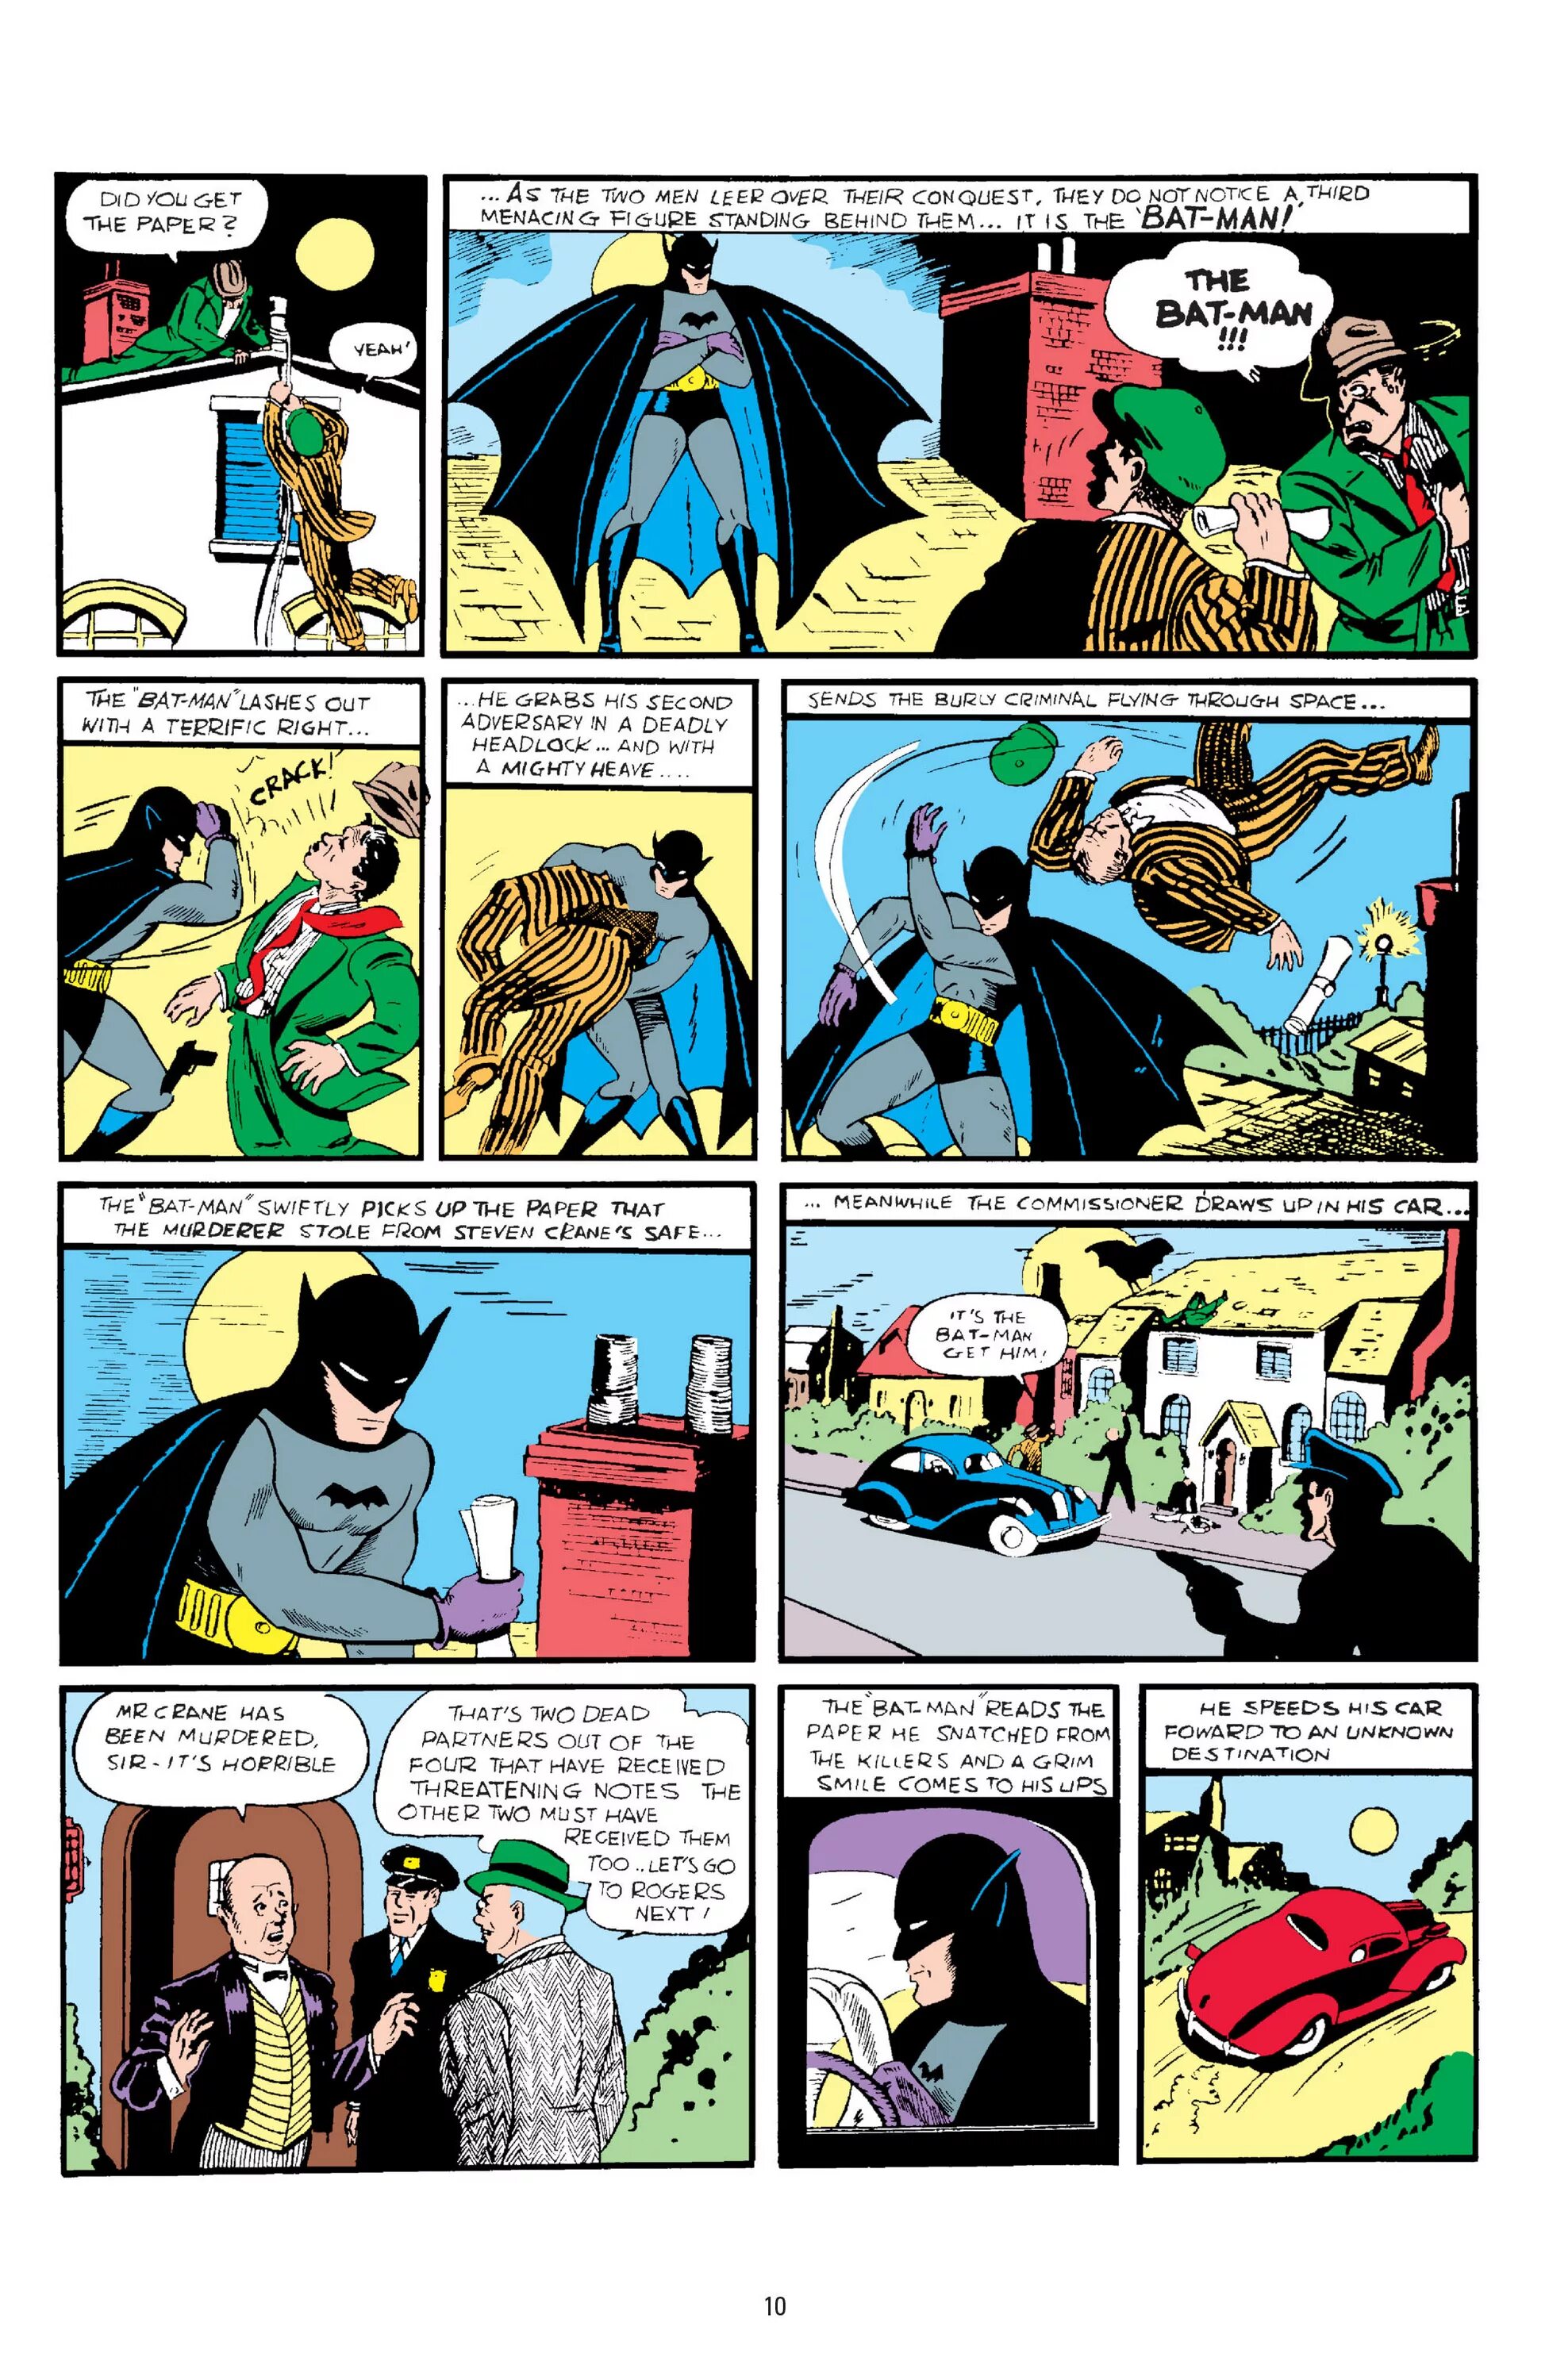 Бэтмен первые комиксы. Бэтмен детектив комикс 1 появление. Бэтмен комикс 1939. Detective Comics 27 май 1939. Детективные комиксы 1939.